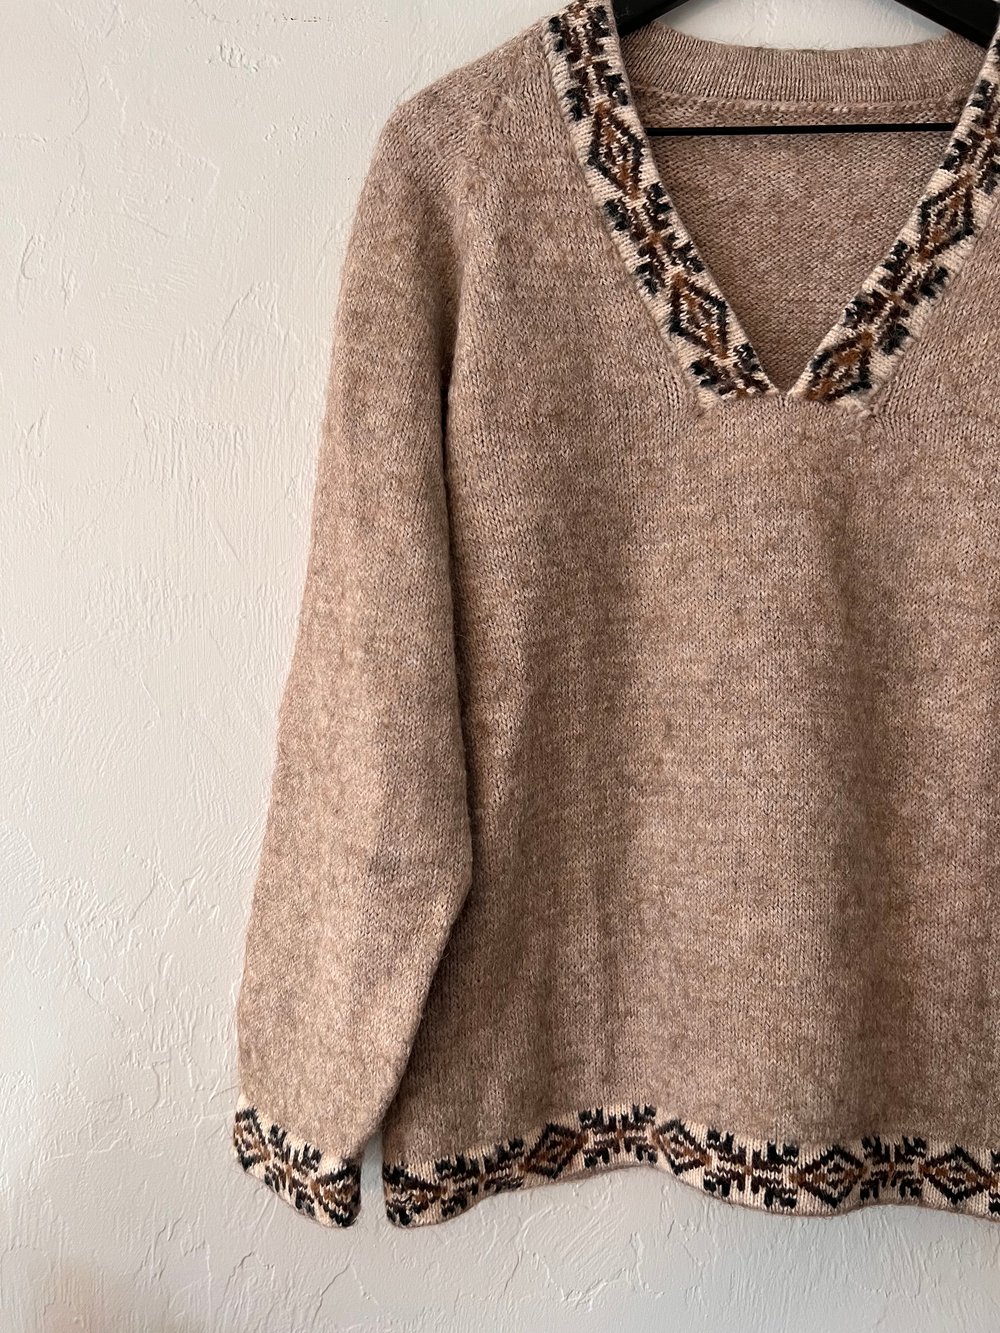 Vintage Wool Blend Neutral Sweater (M)